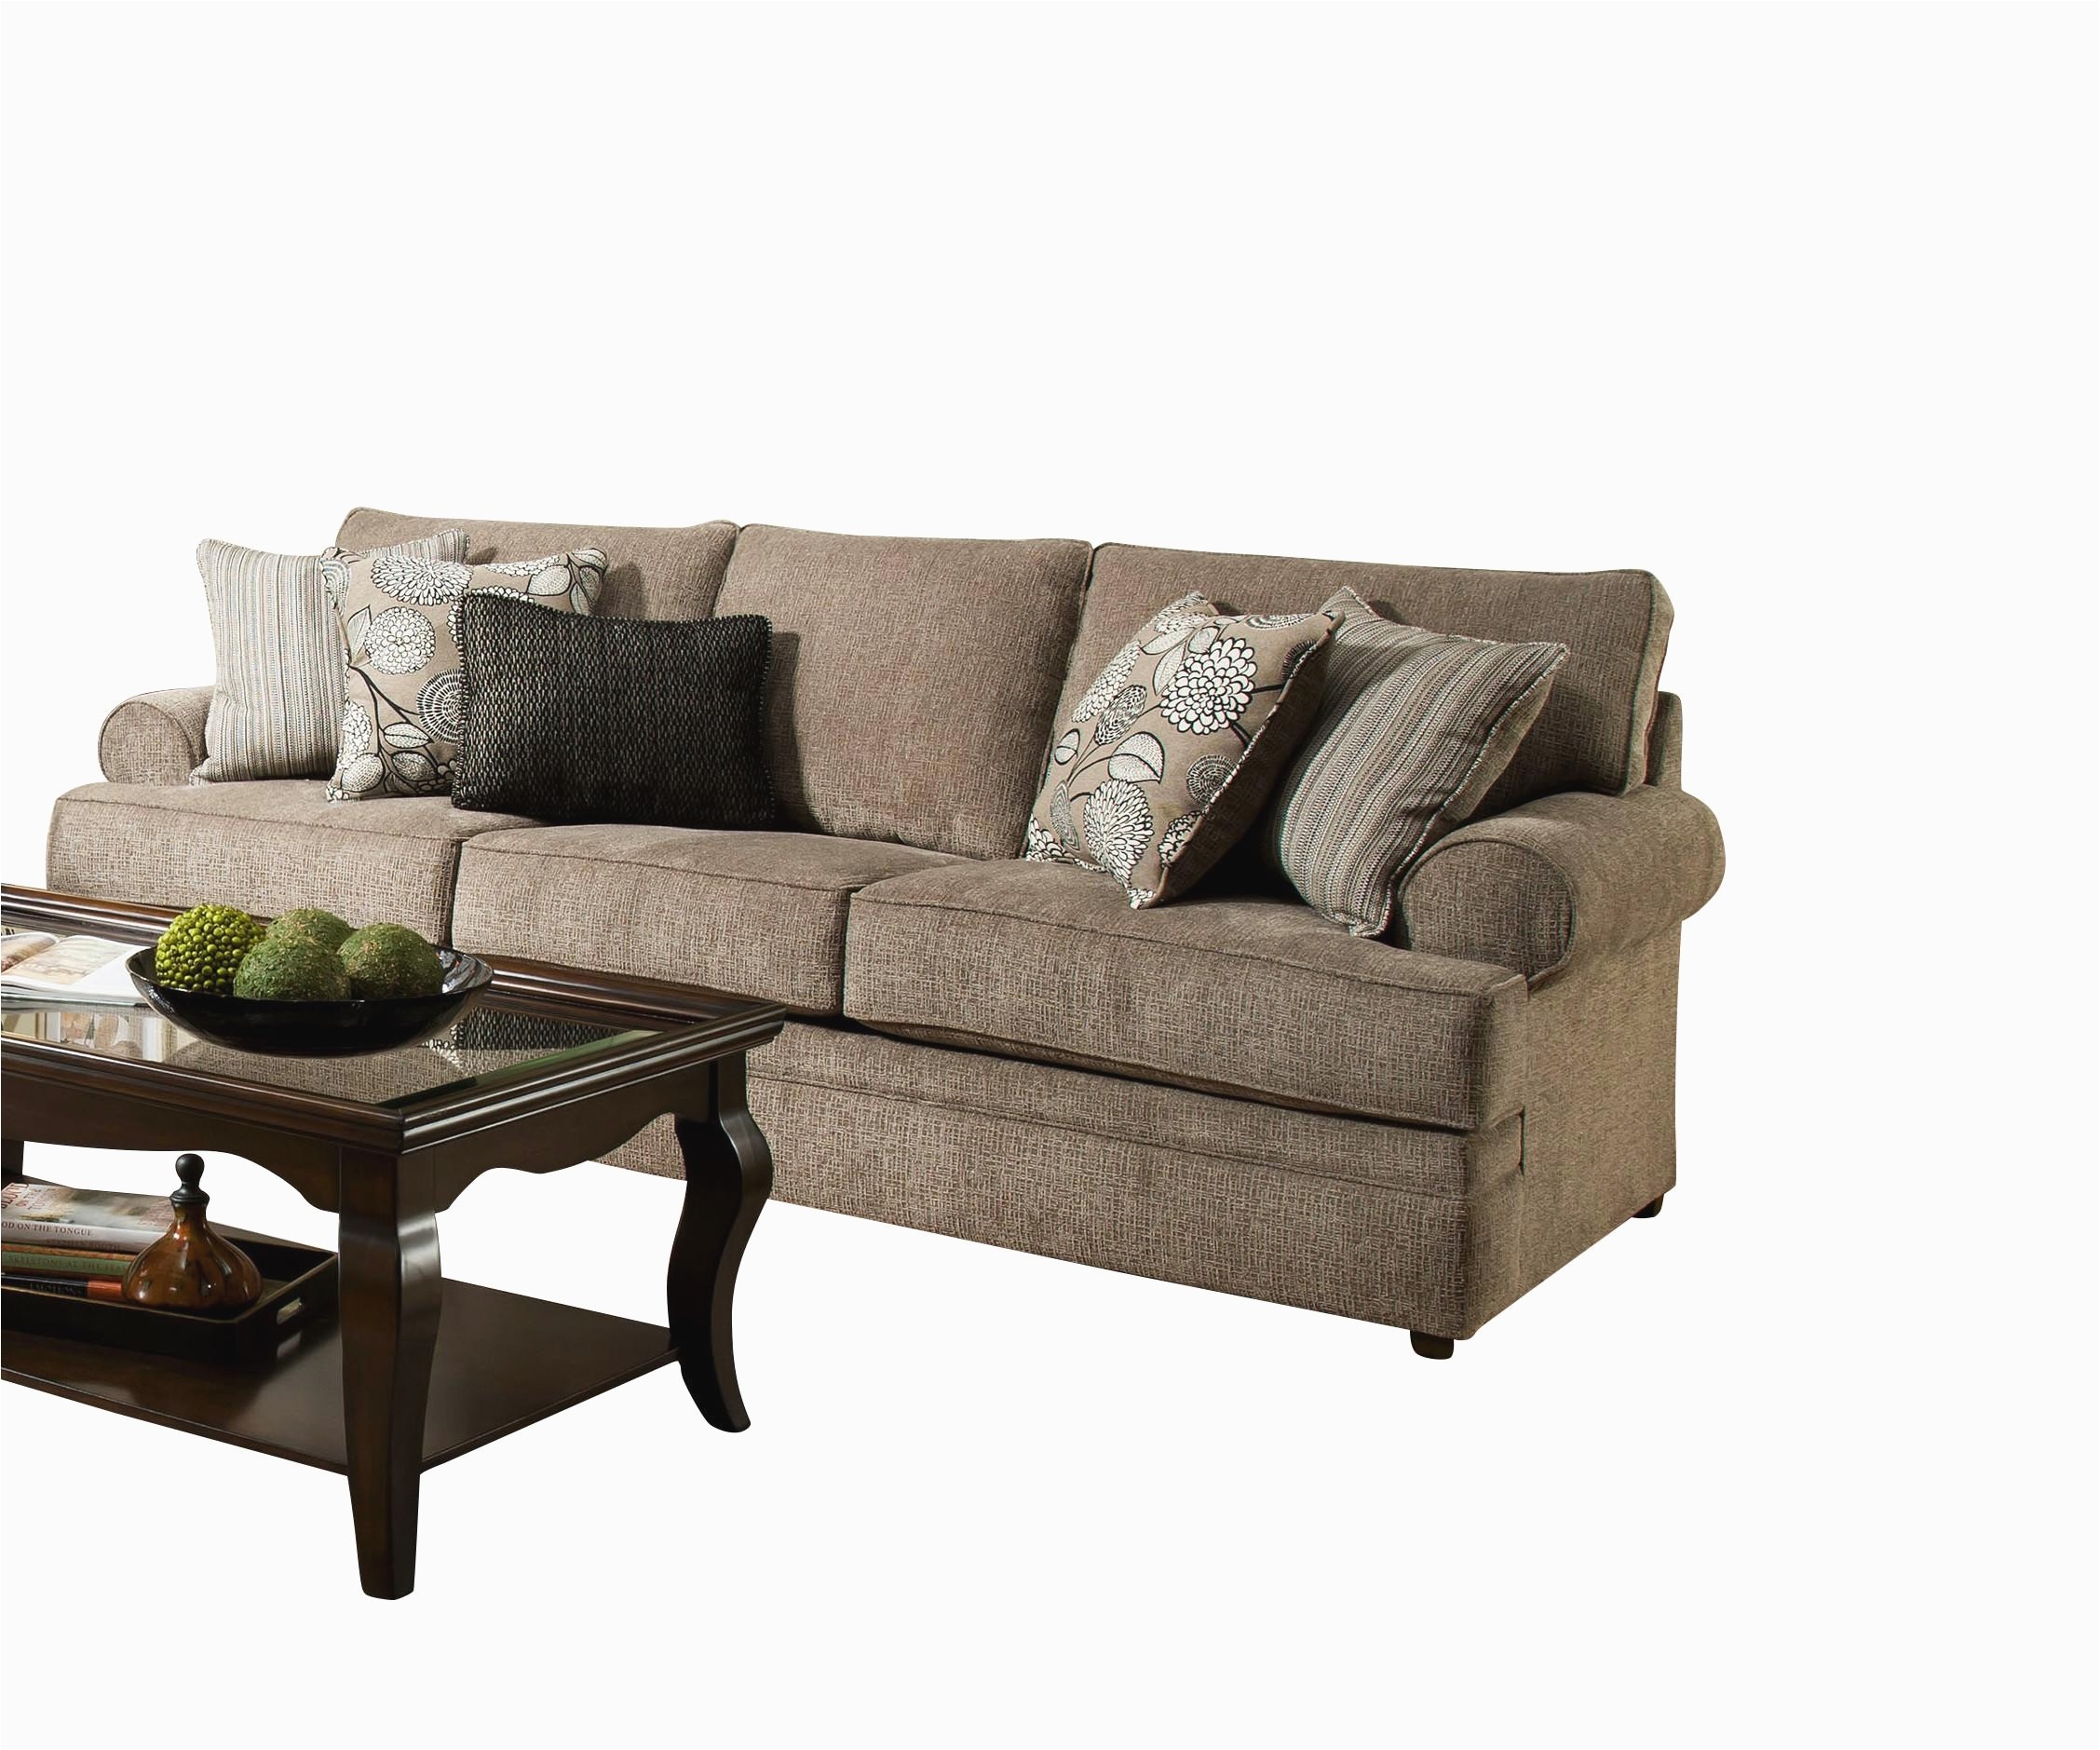 full size of home design macys tufted sofa elegant fresh macys furniture leather sofa 35 size